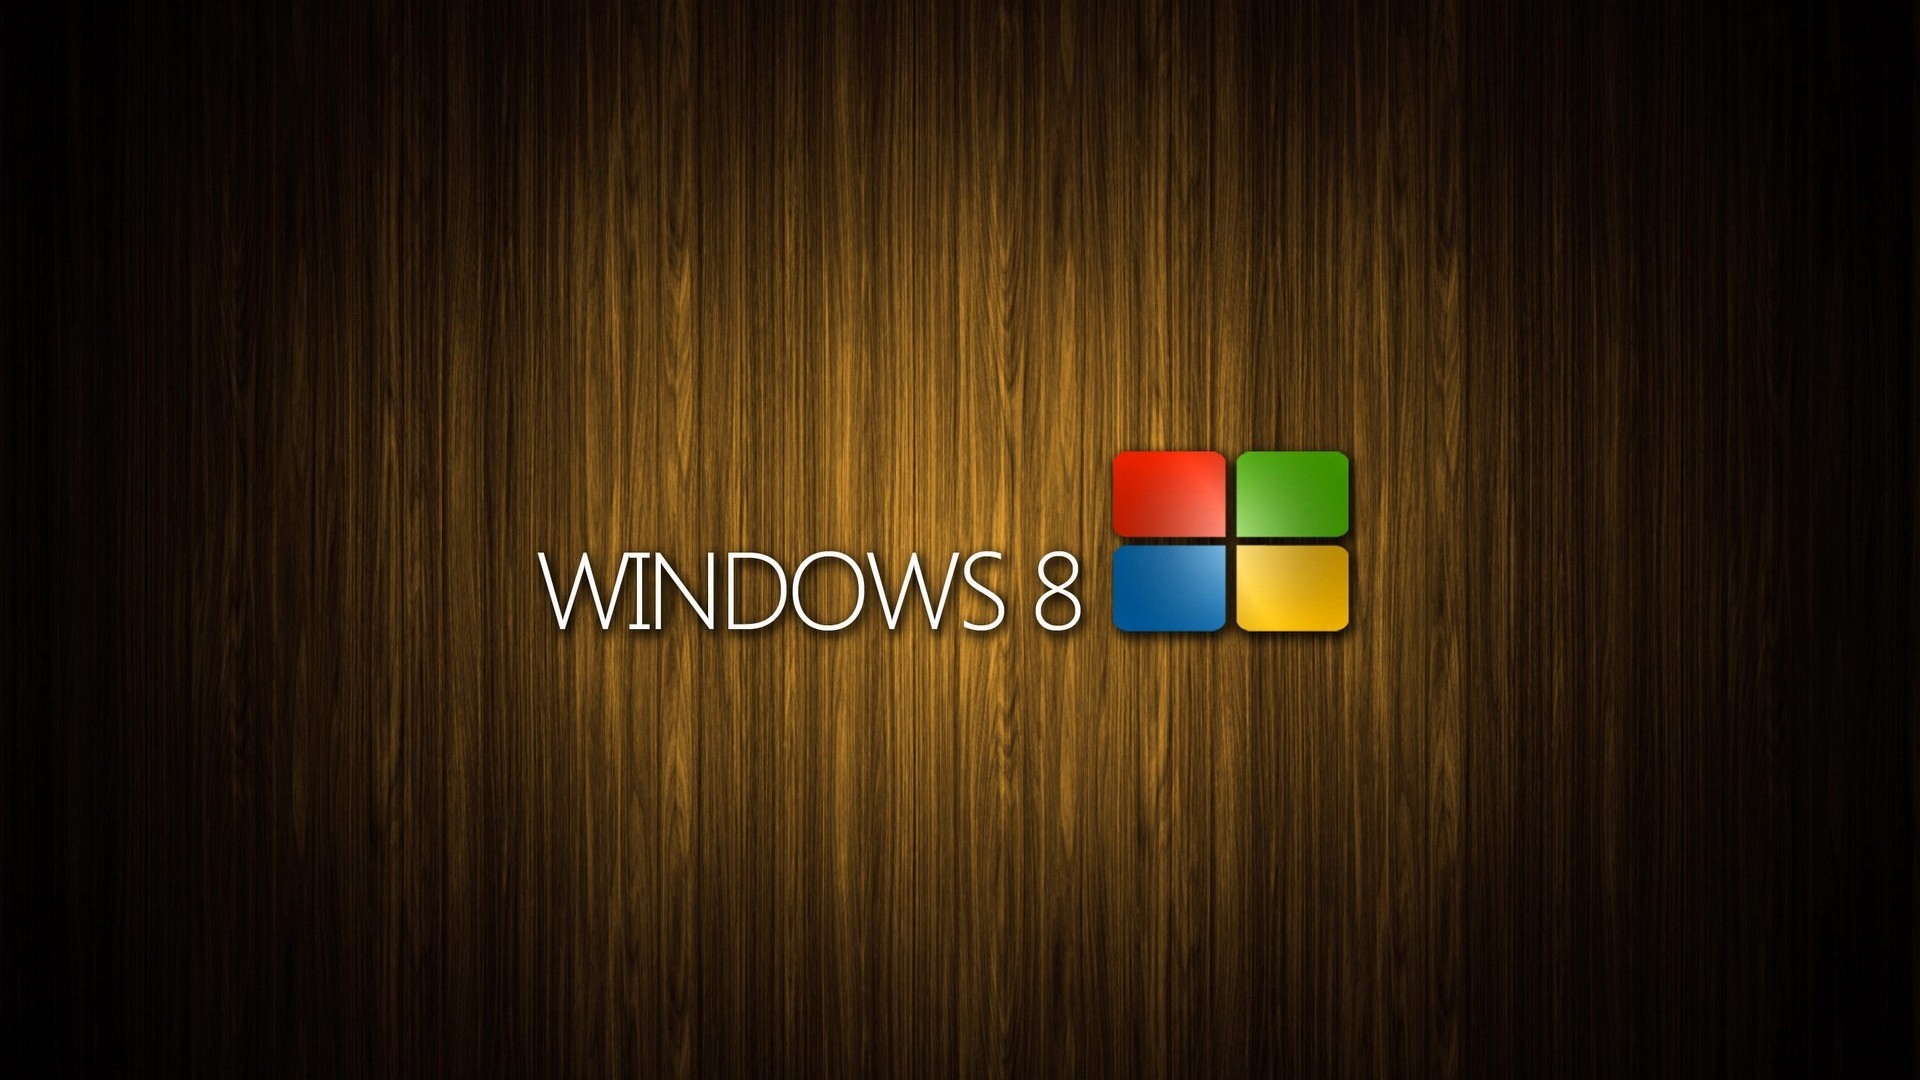 Microsoft Windows 8 Logo 1920 X 1080 Hdtv 1080p Wallpaper